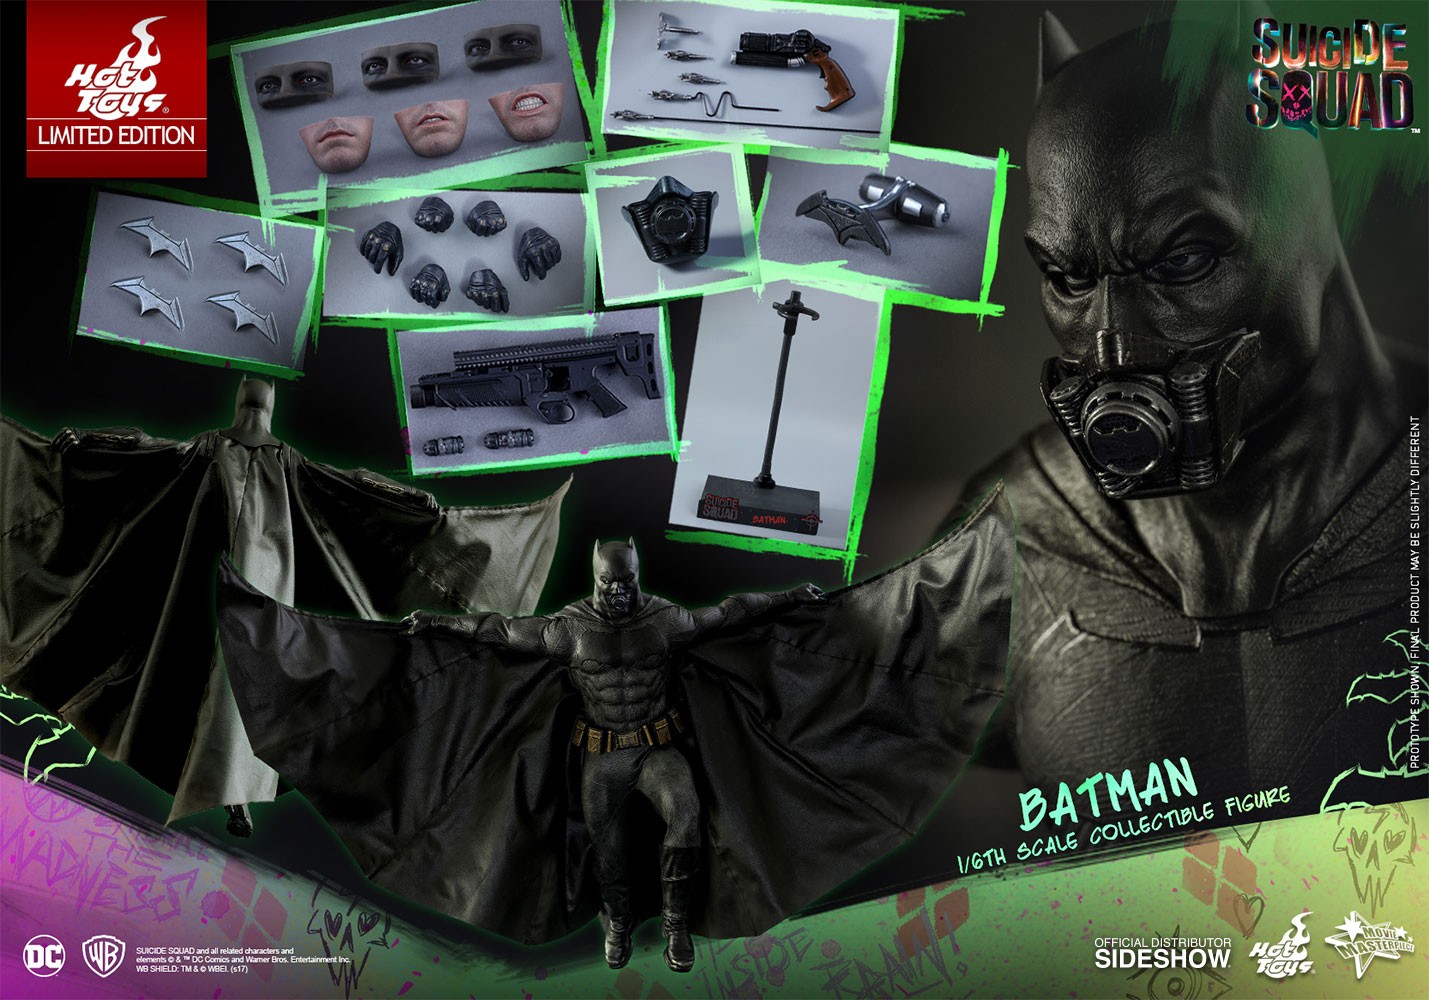 Batman Exclusive Edition (Prototype Shown) View 23